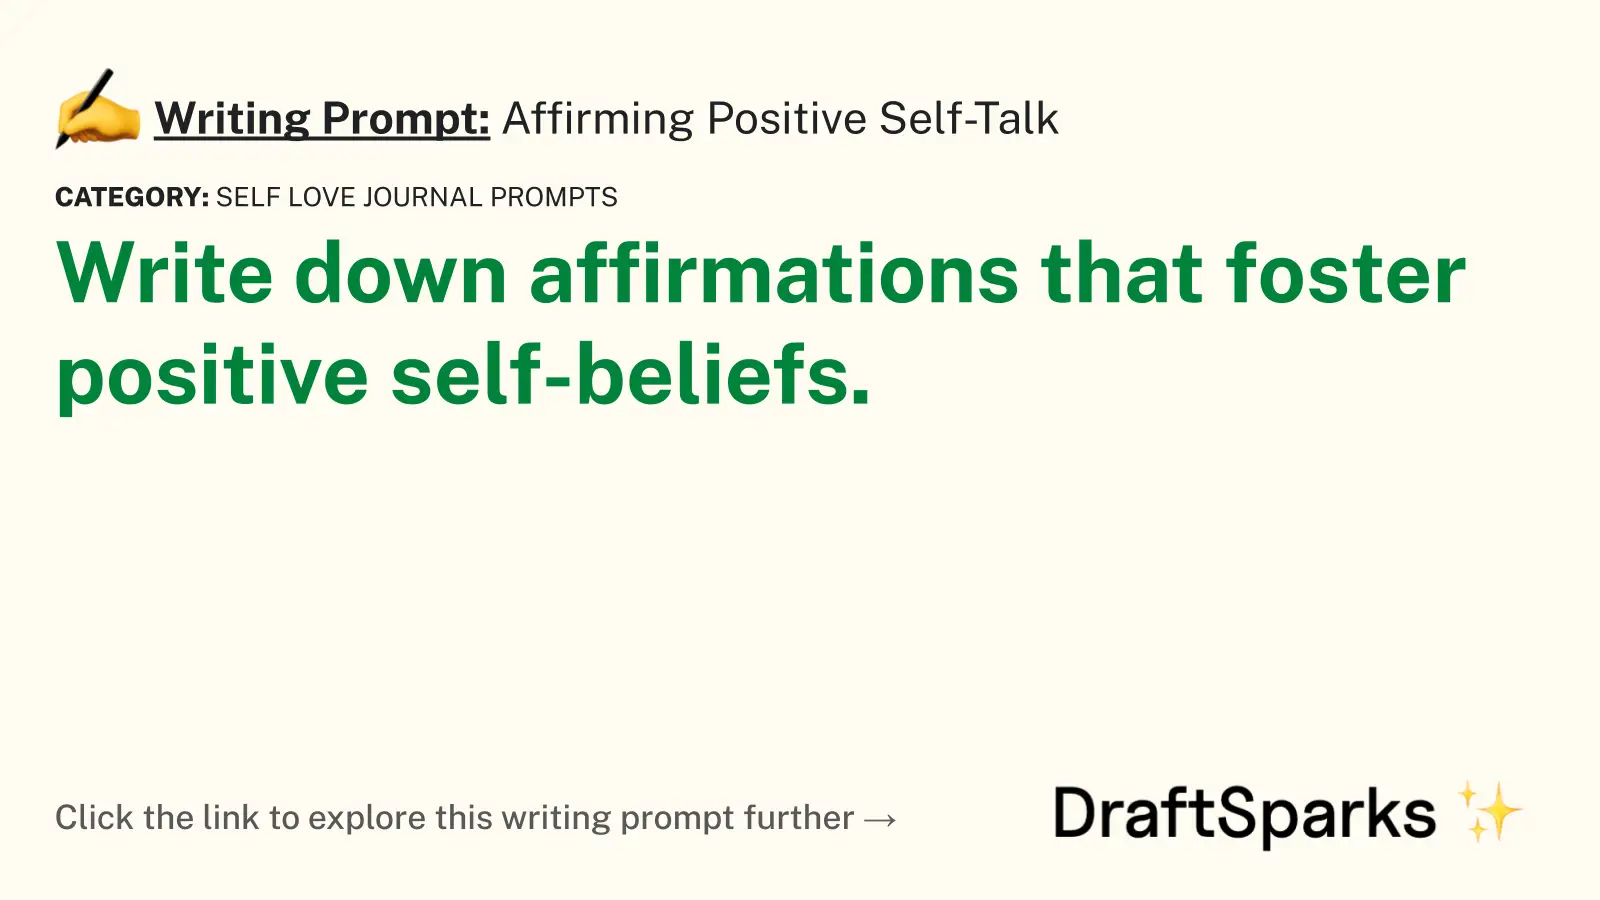 Affirming Positive Self-Talk